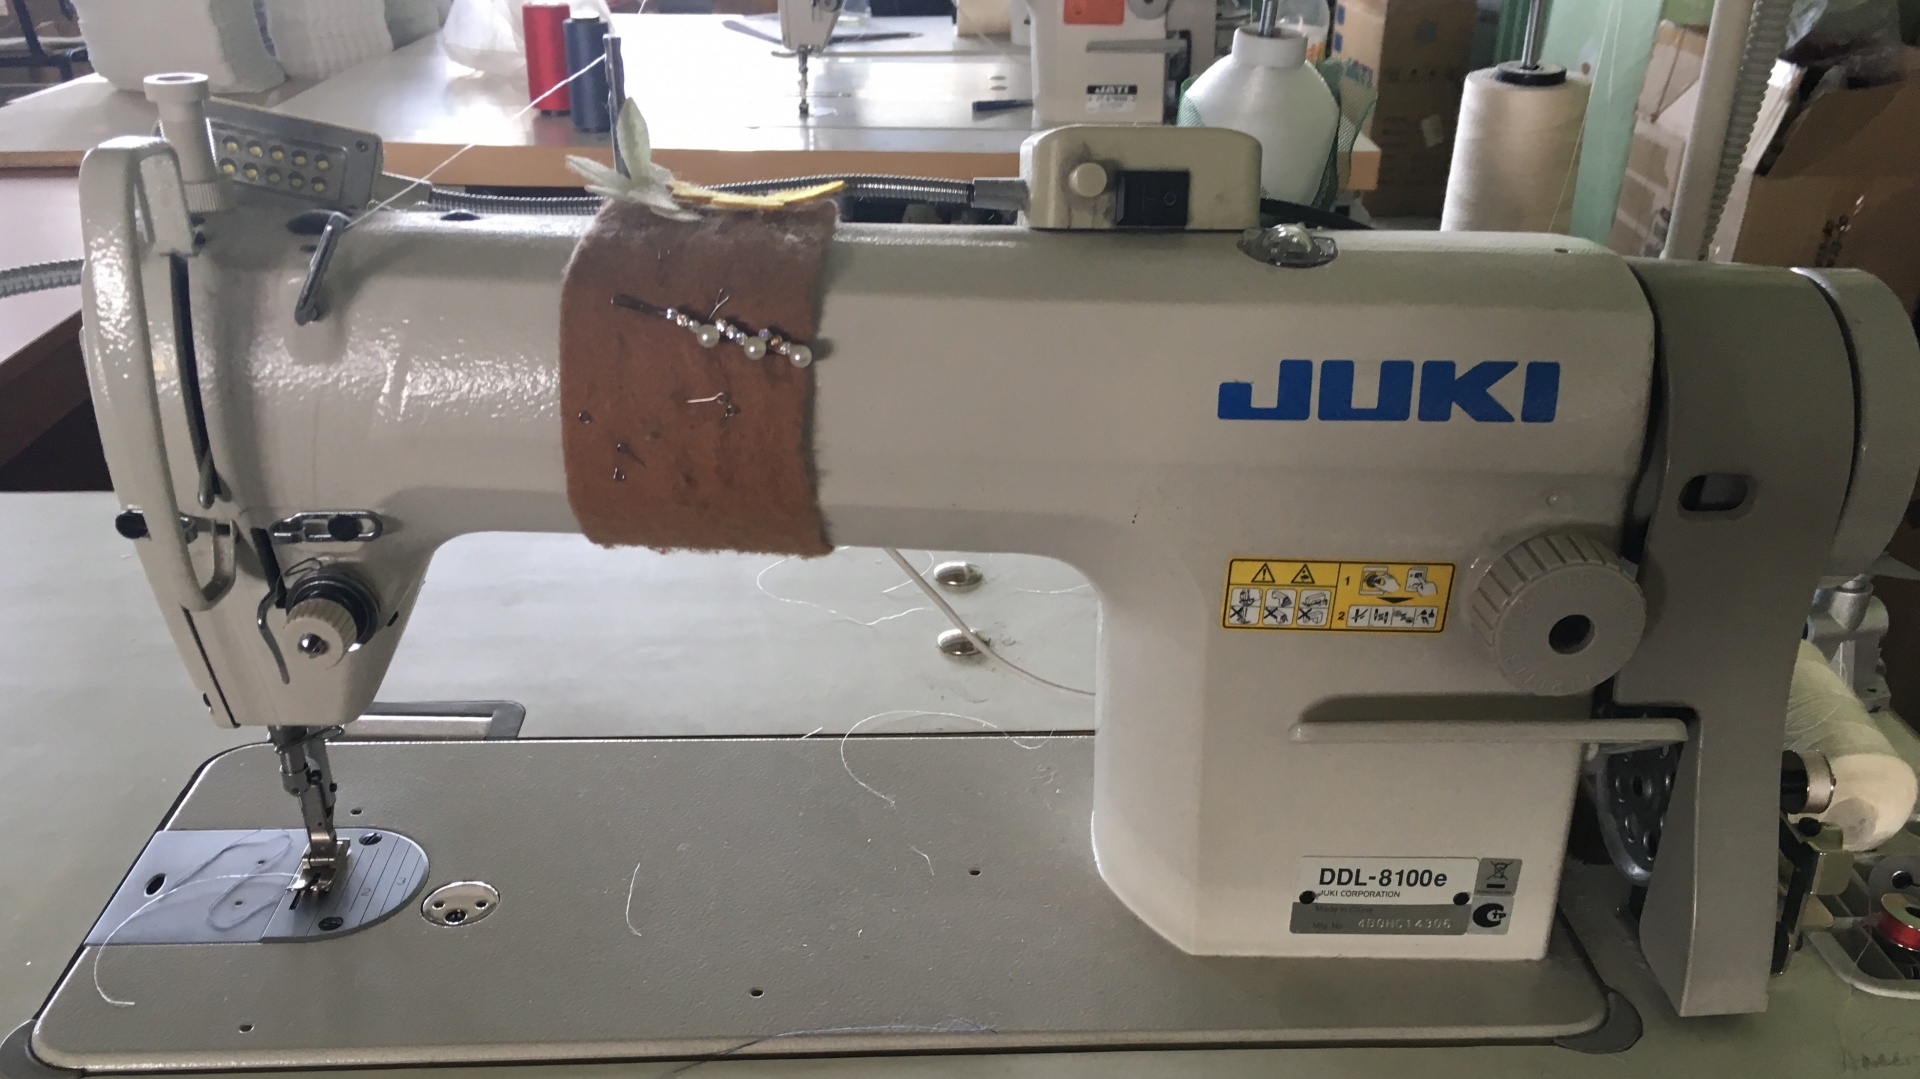 Машина промышленная б у. Juki 8100e. Промышленная машинка Juki 8100e. Швейная машина Промышленная Juki DDL-8100e ghjbpdjlbntkm. DDL-8100e.